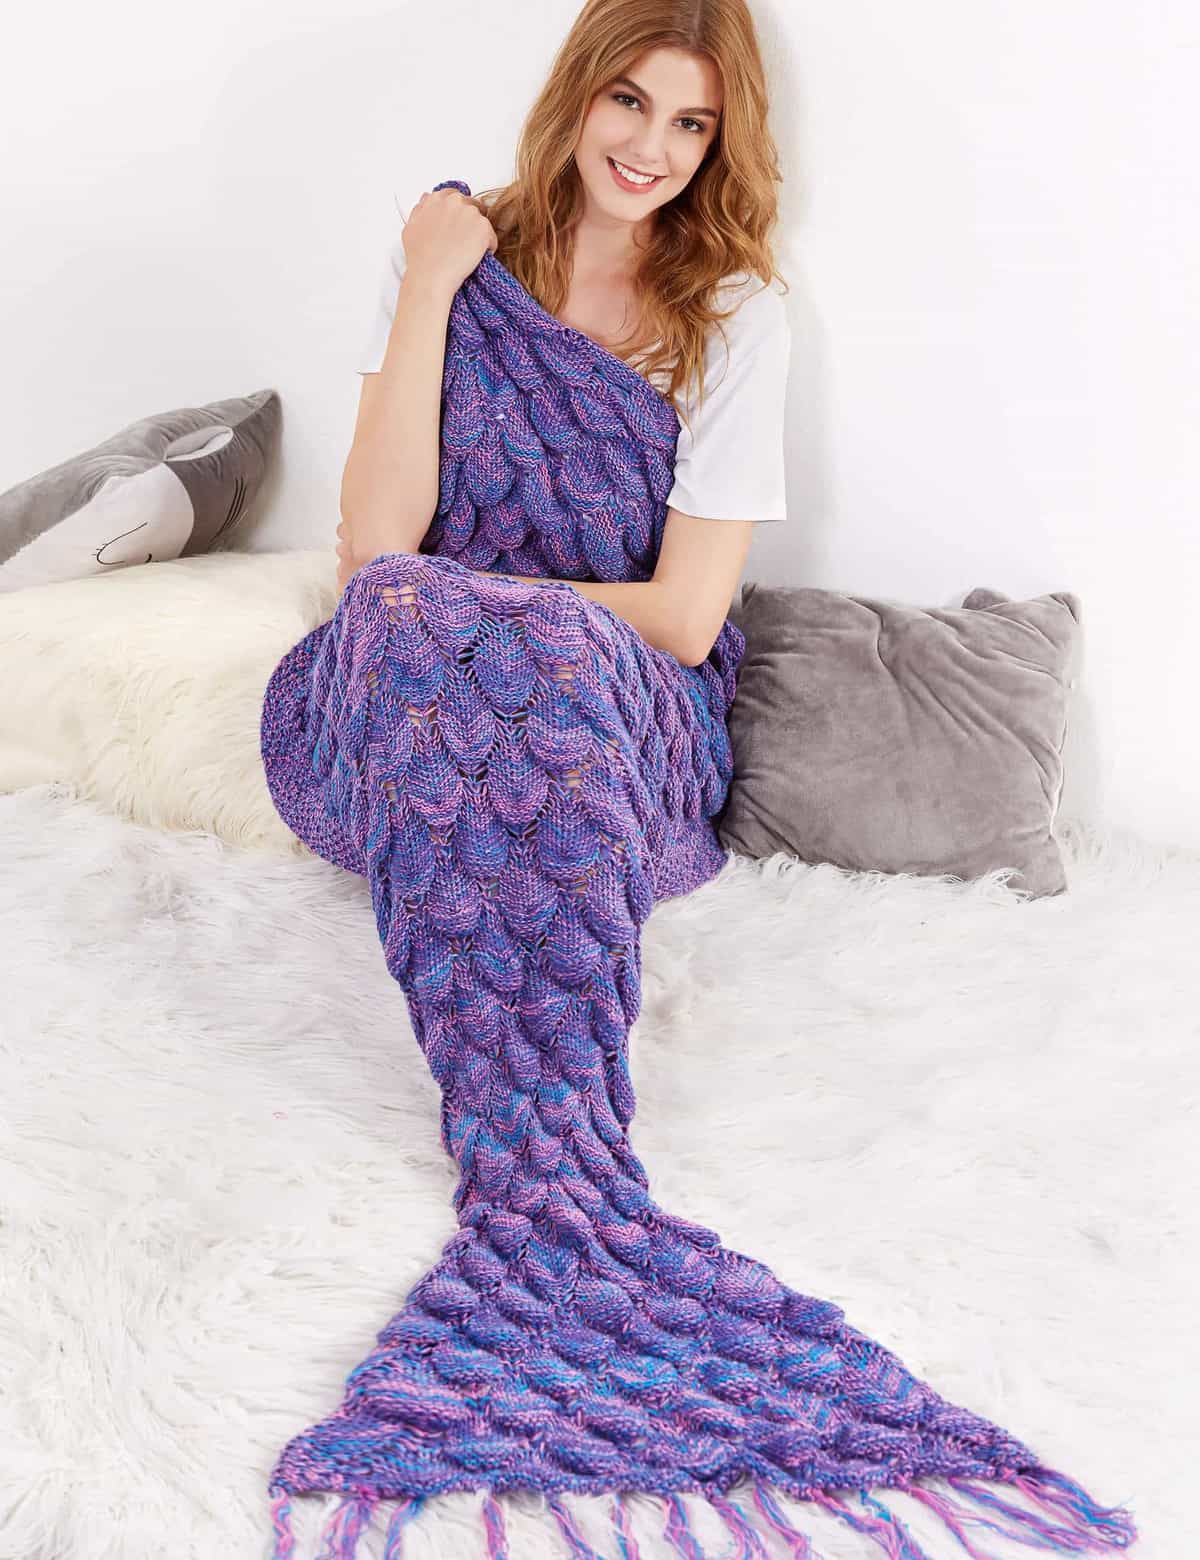 Textured Knit Mermaid Blankets via SheIn